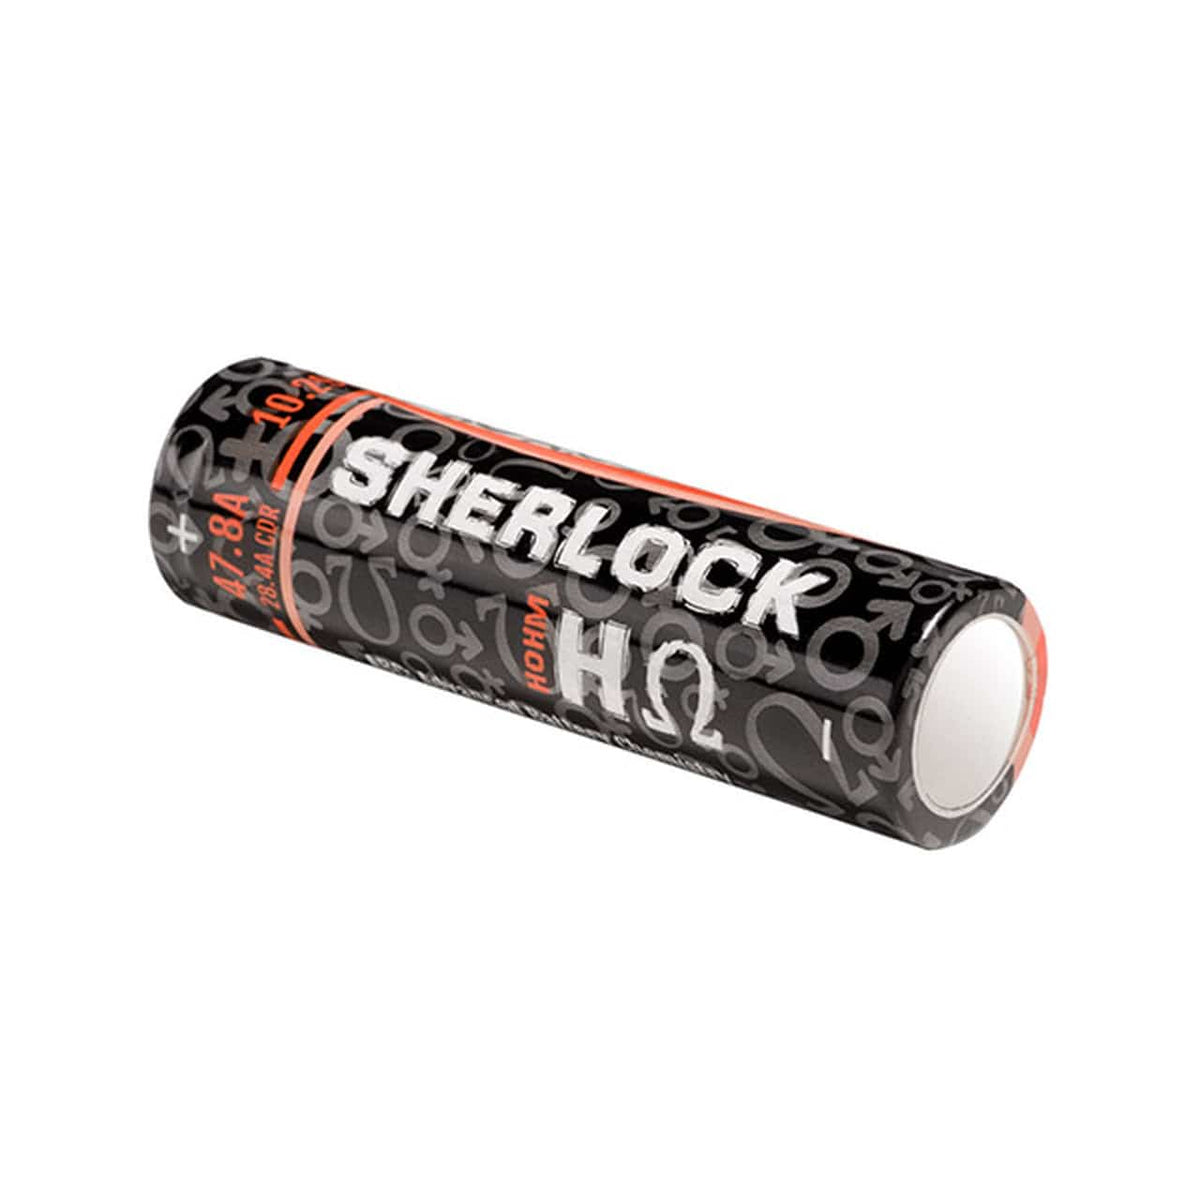 HohmTech Batteries Sherlock Hohm 20700 2782mAh 47.8A Battery